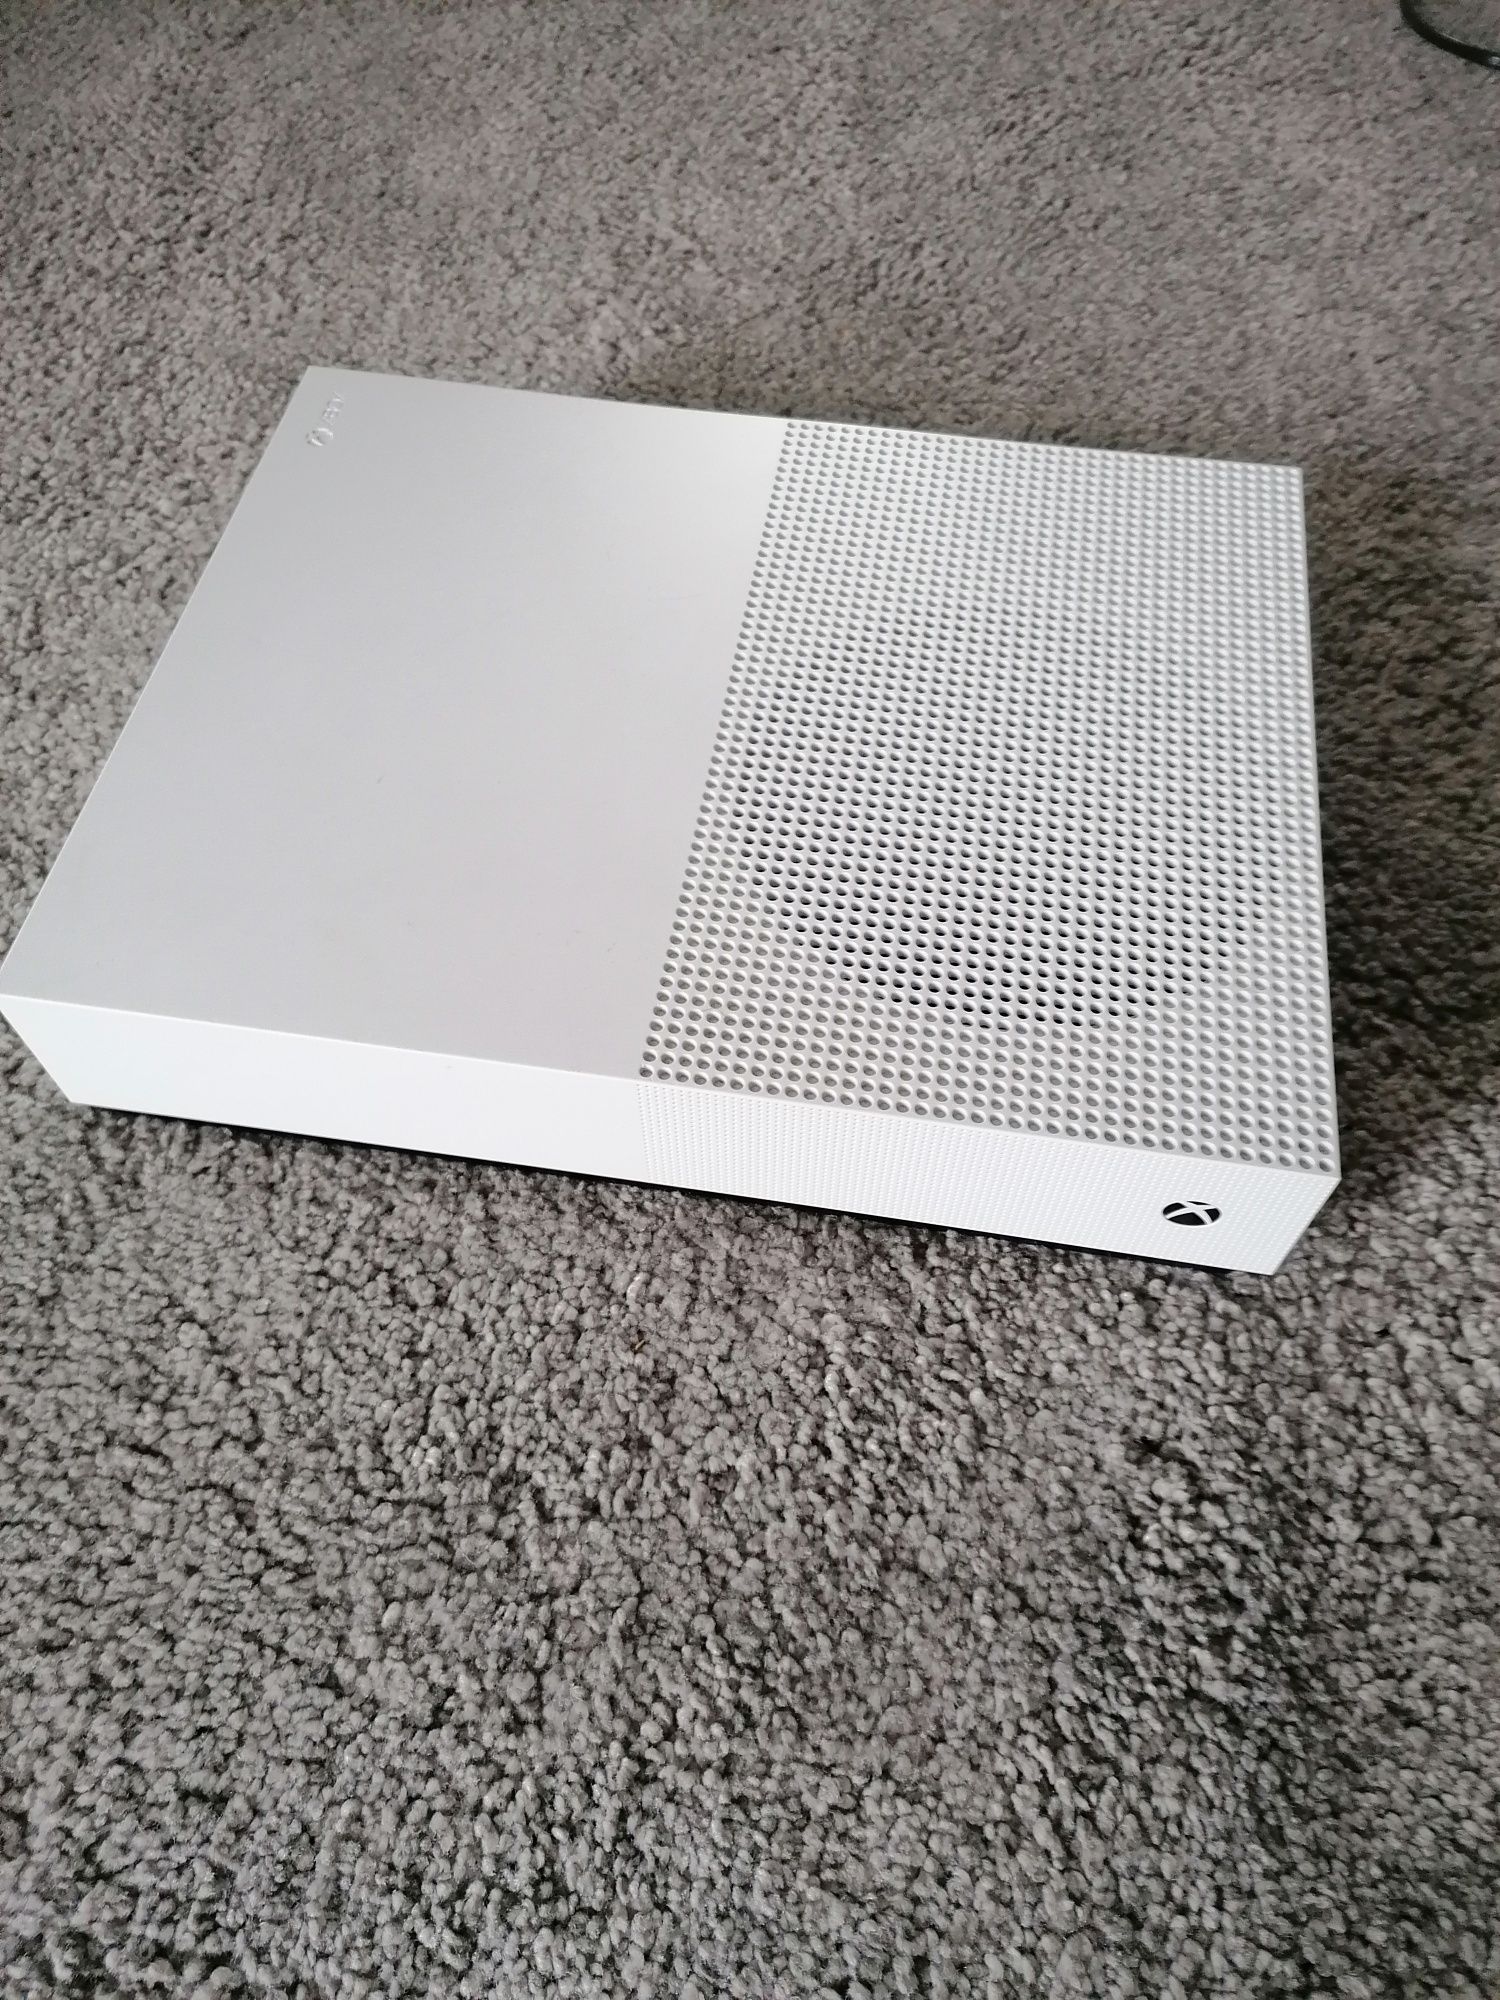 Xbox one S digital 1TB